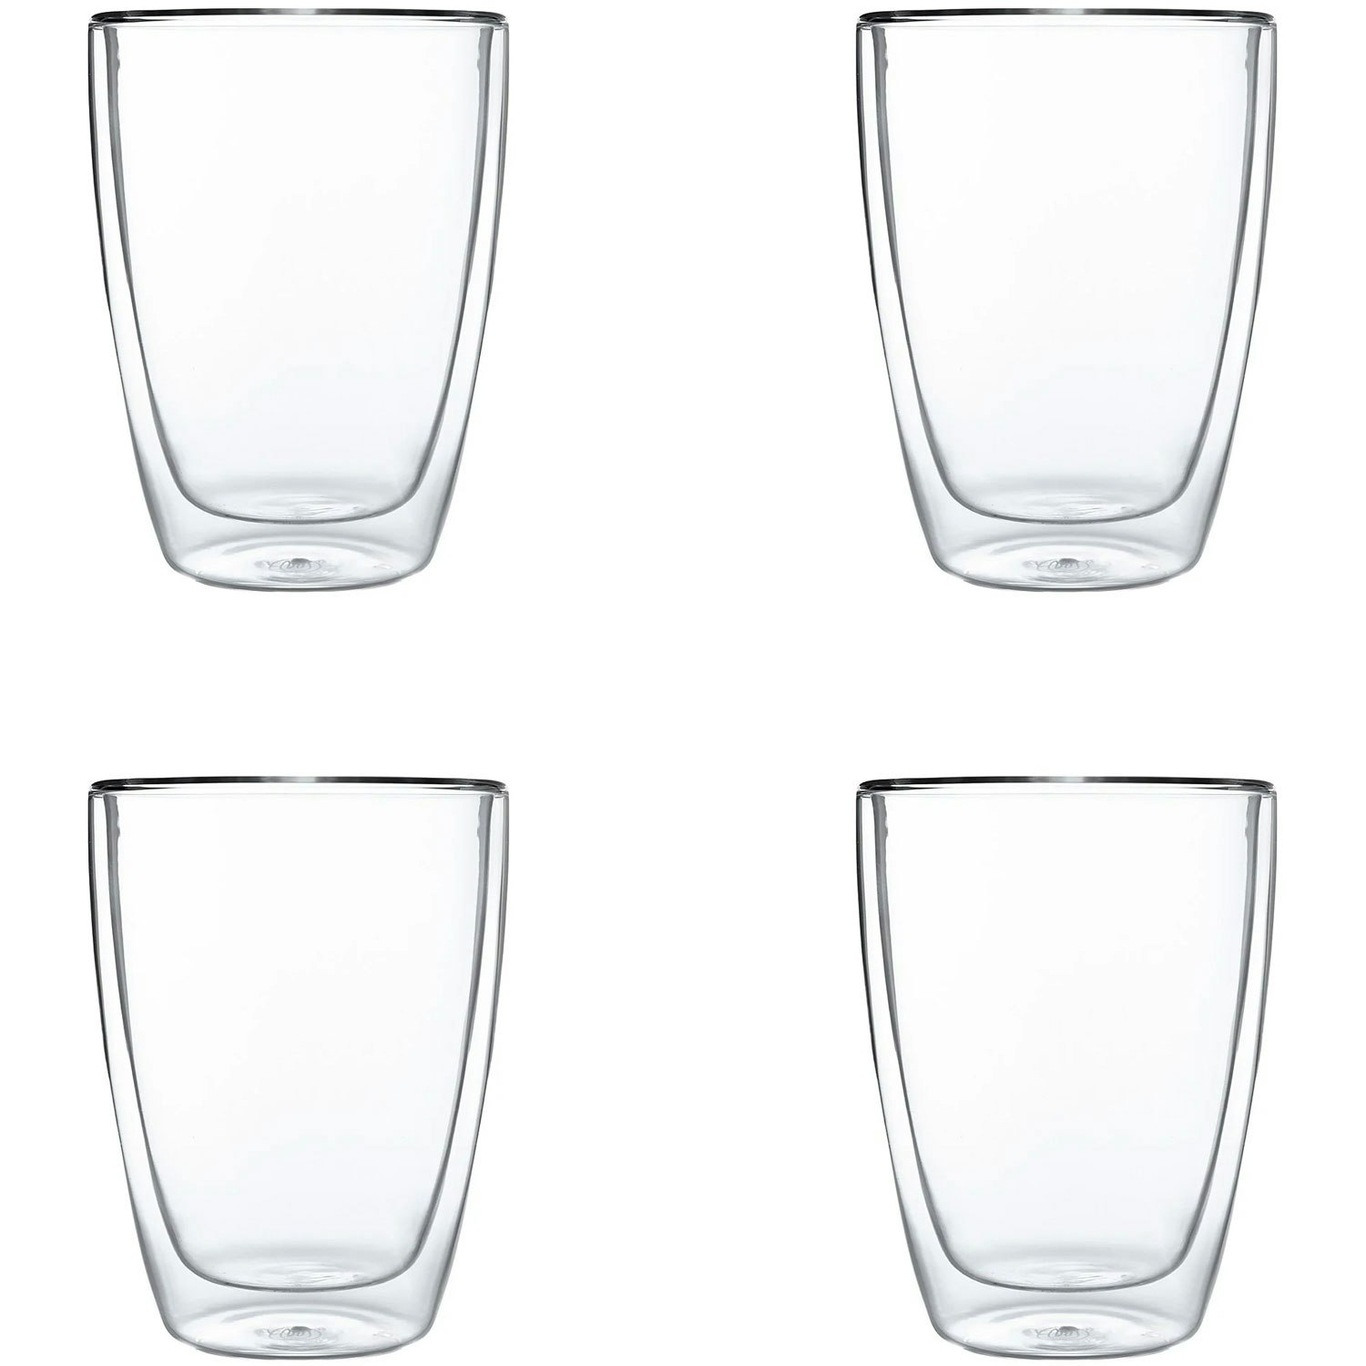 https://royaldesign.com/image/2/mareld-latte-glass-28-cl-4-pack-0?w=800&quality=80